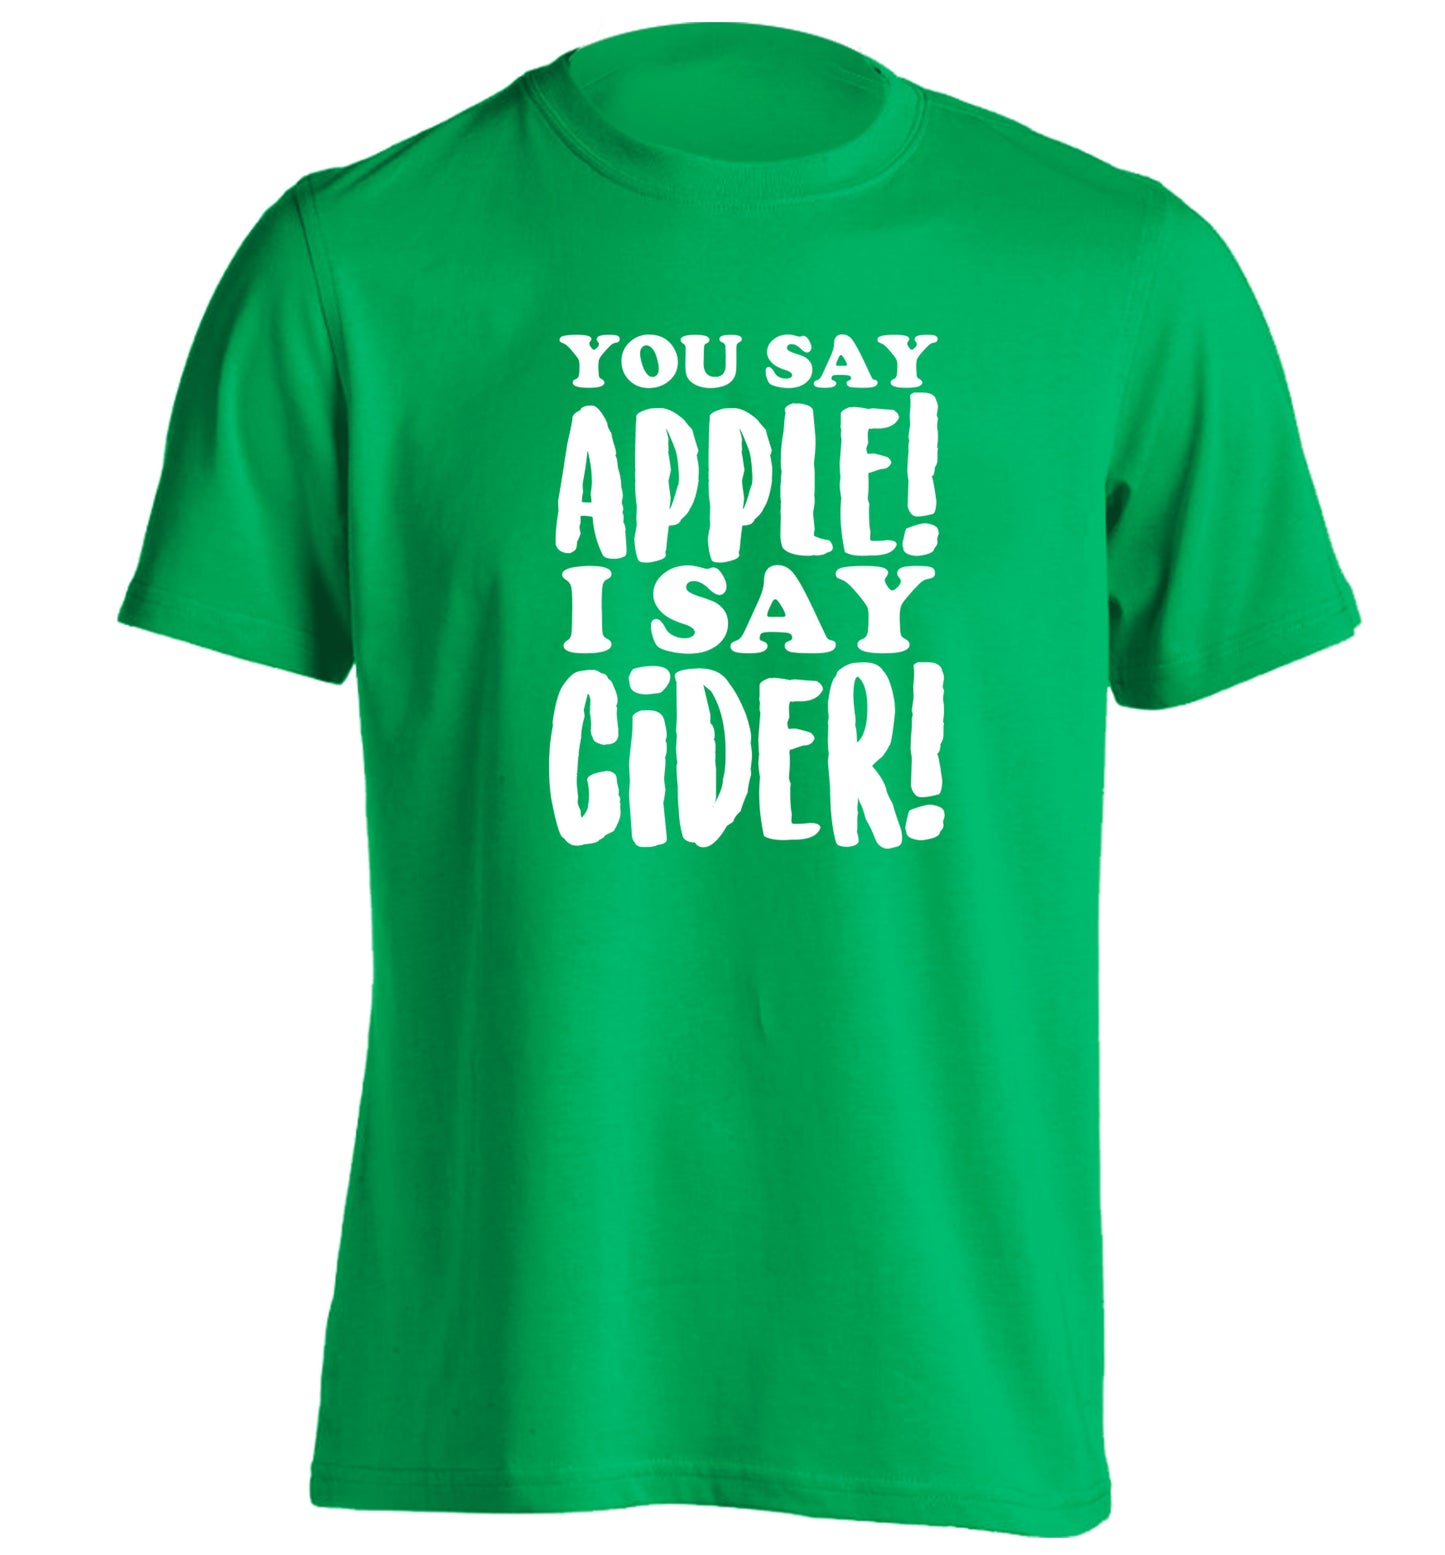 You say apple I say cider! adults unisex green Tshirt 2XL